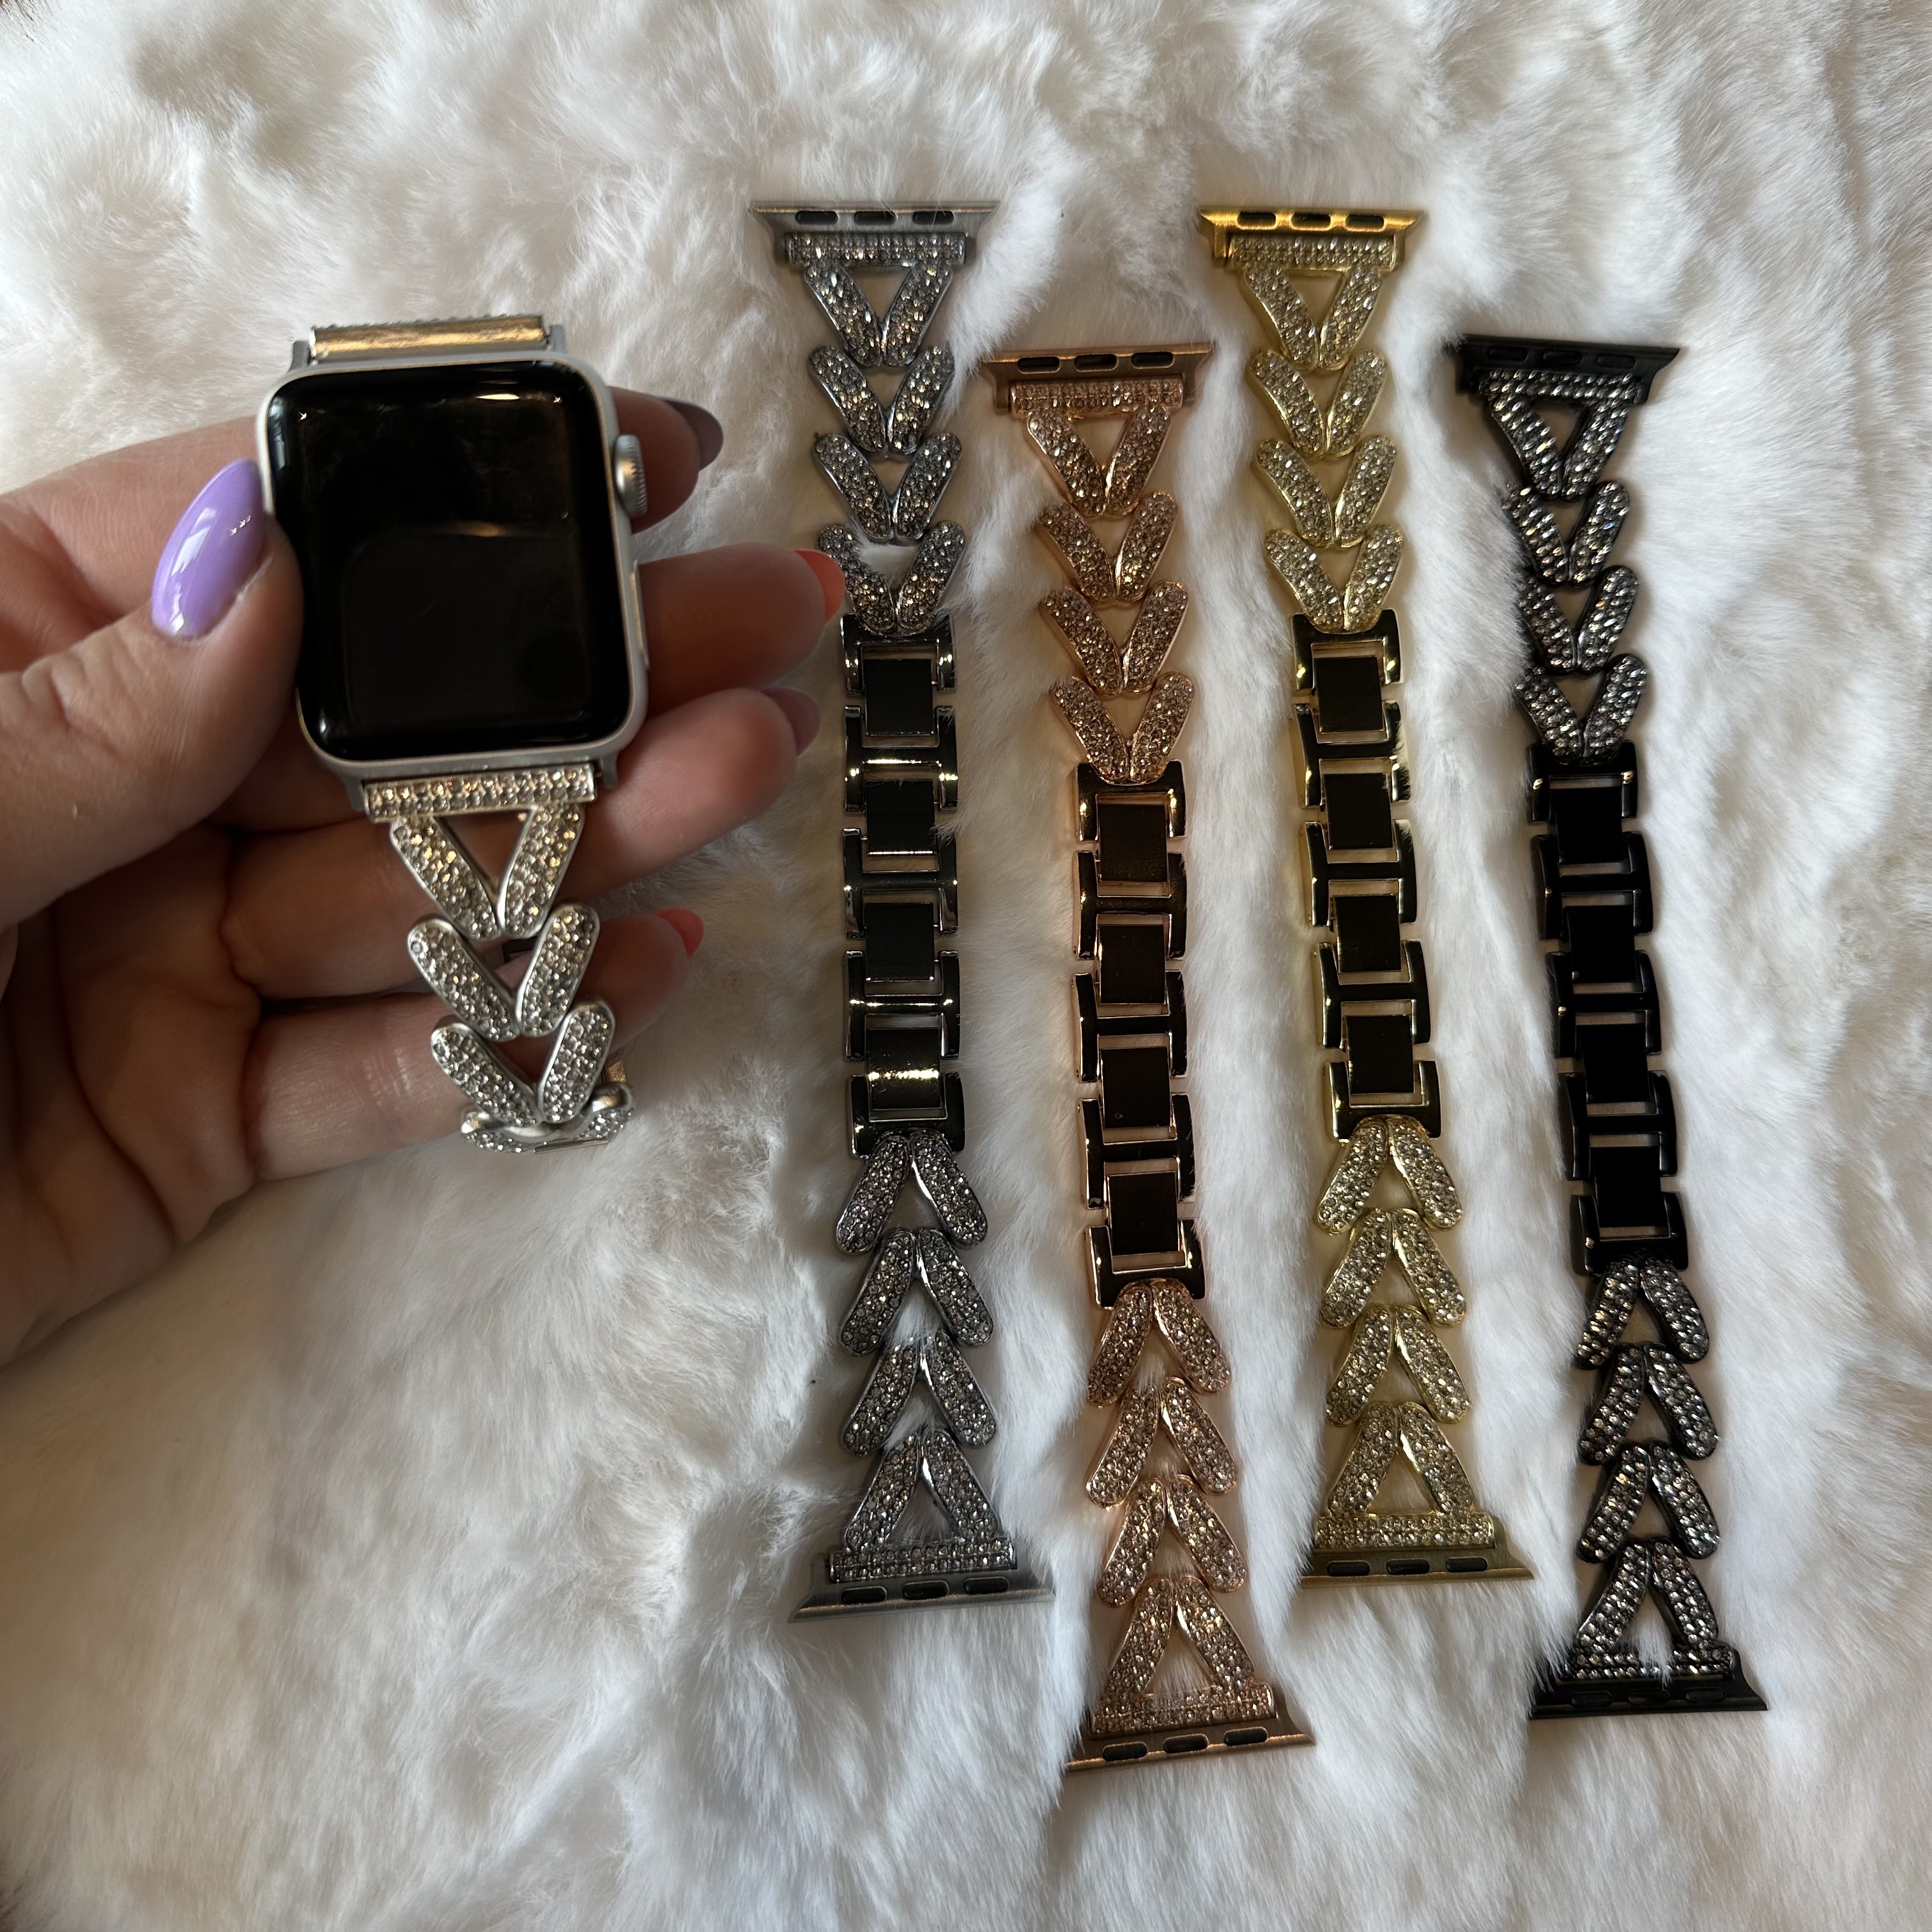 Apple Watch Herz-Stahlgliederarmband – Faye Gold